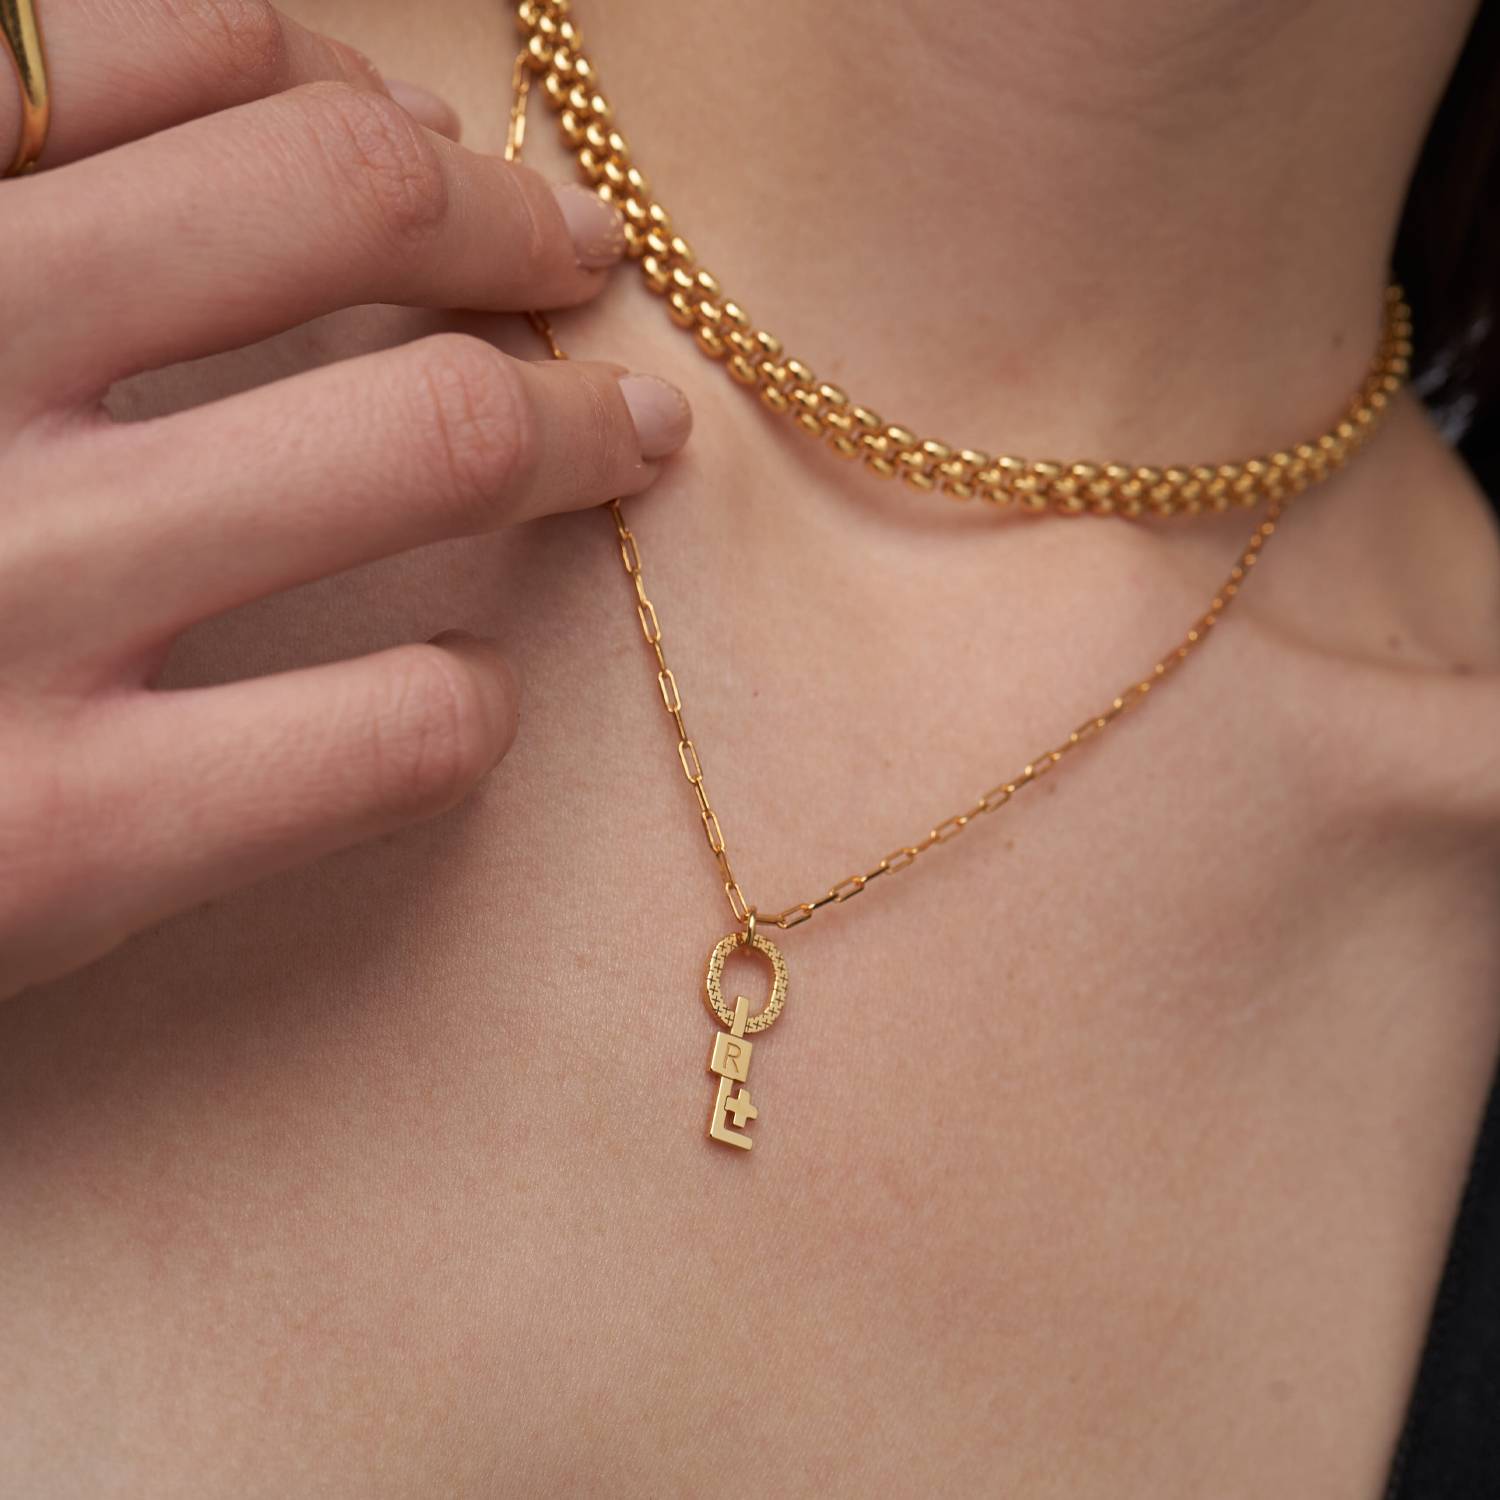 Oak&luna Engraved Key Charm Necklace - 14K Solid Gold-3 product photo